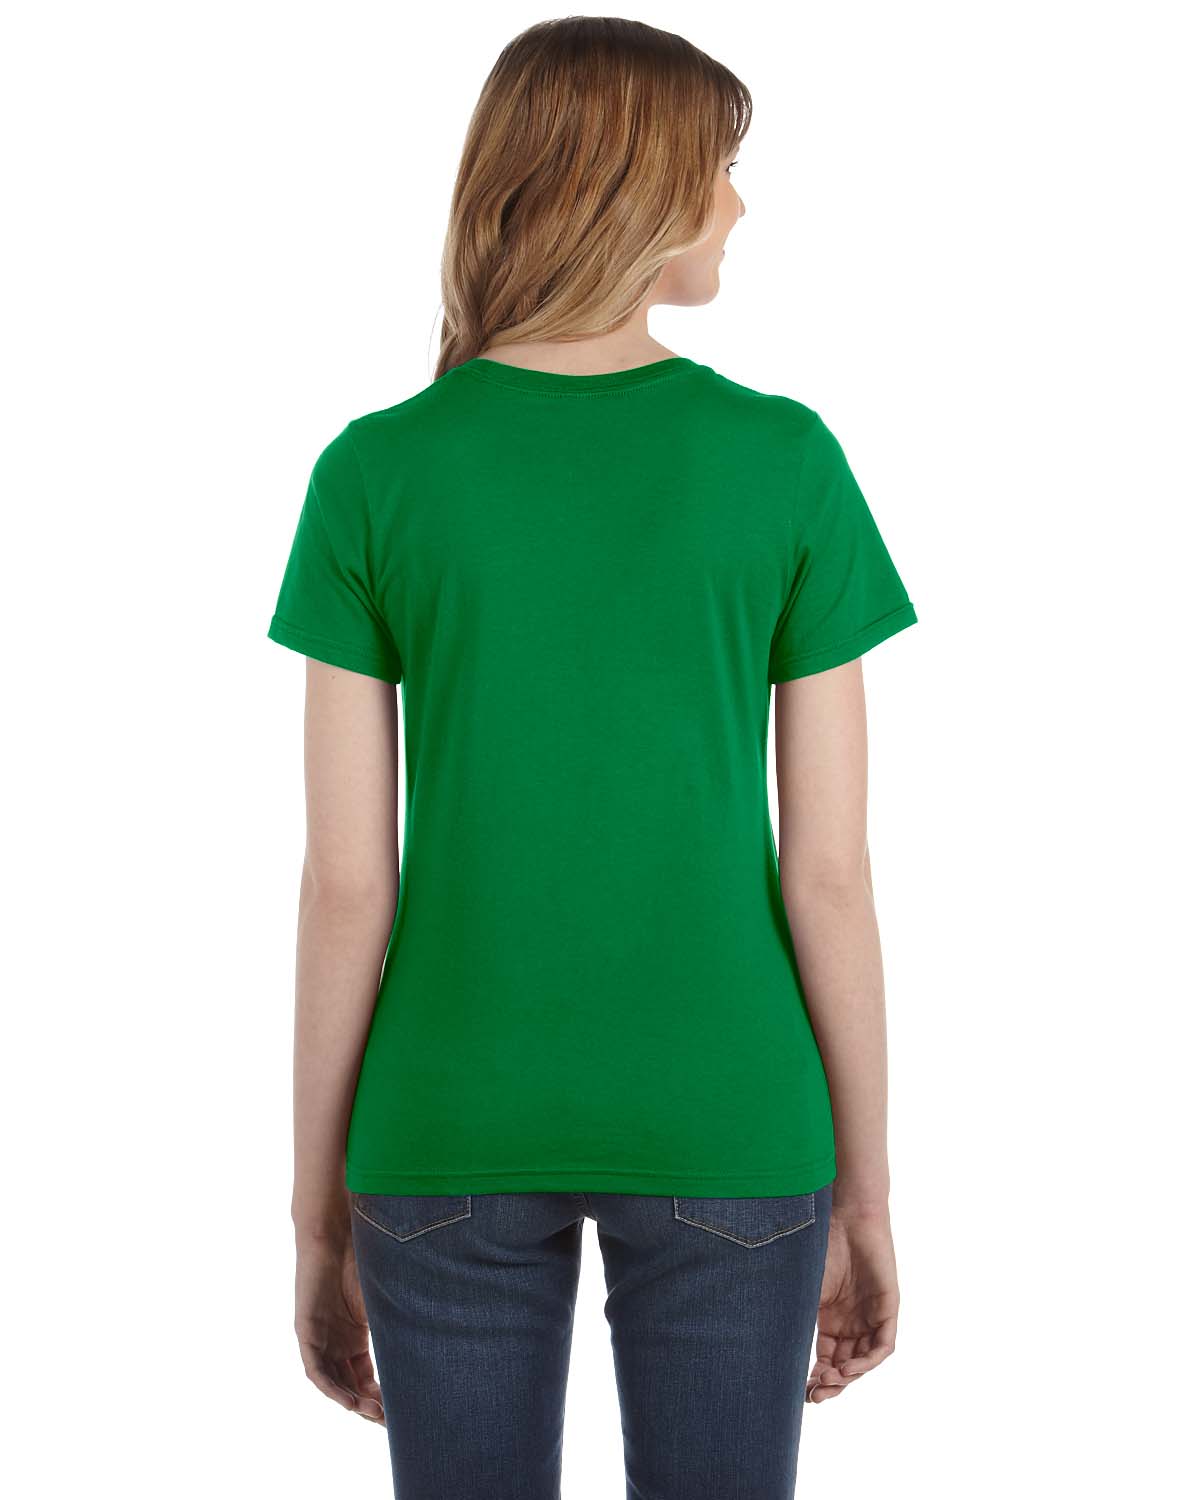 NEW Anvil Women's 100% Ringspun Cotton Fashion Fit T-Shirt M-880 | eBay